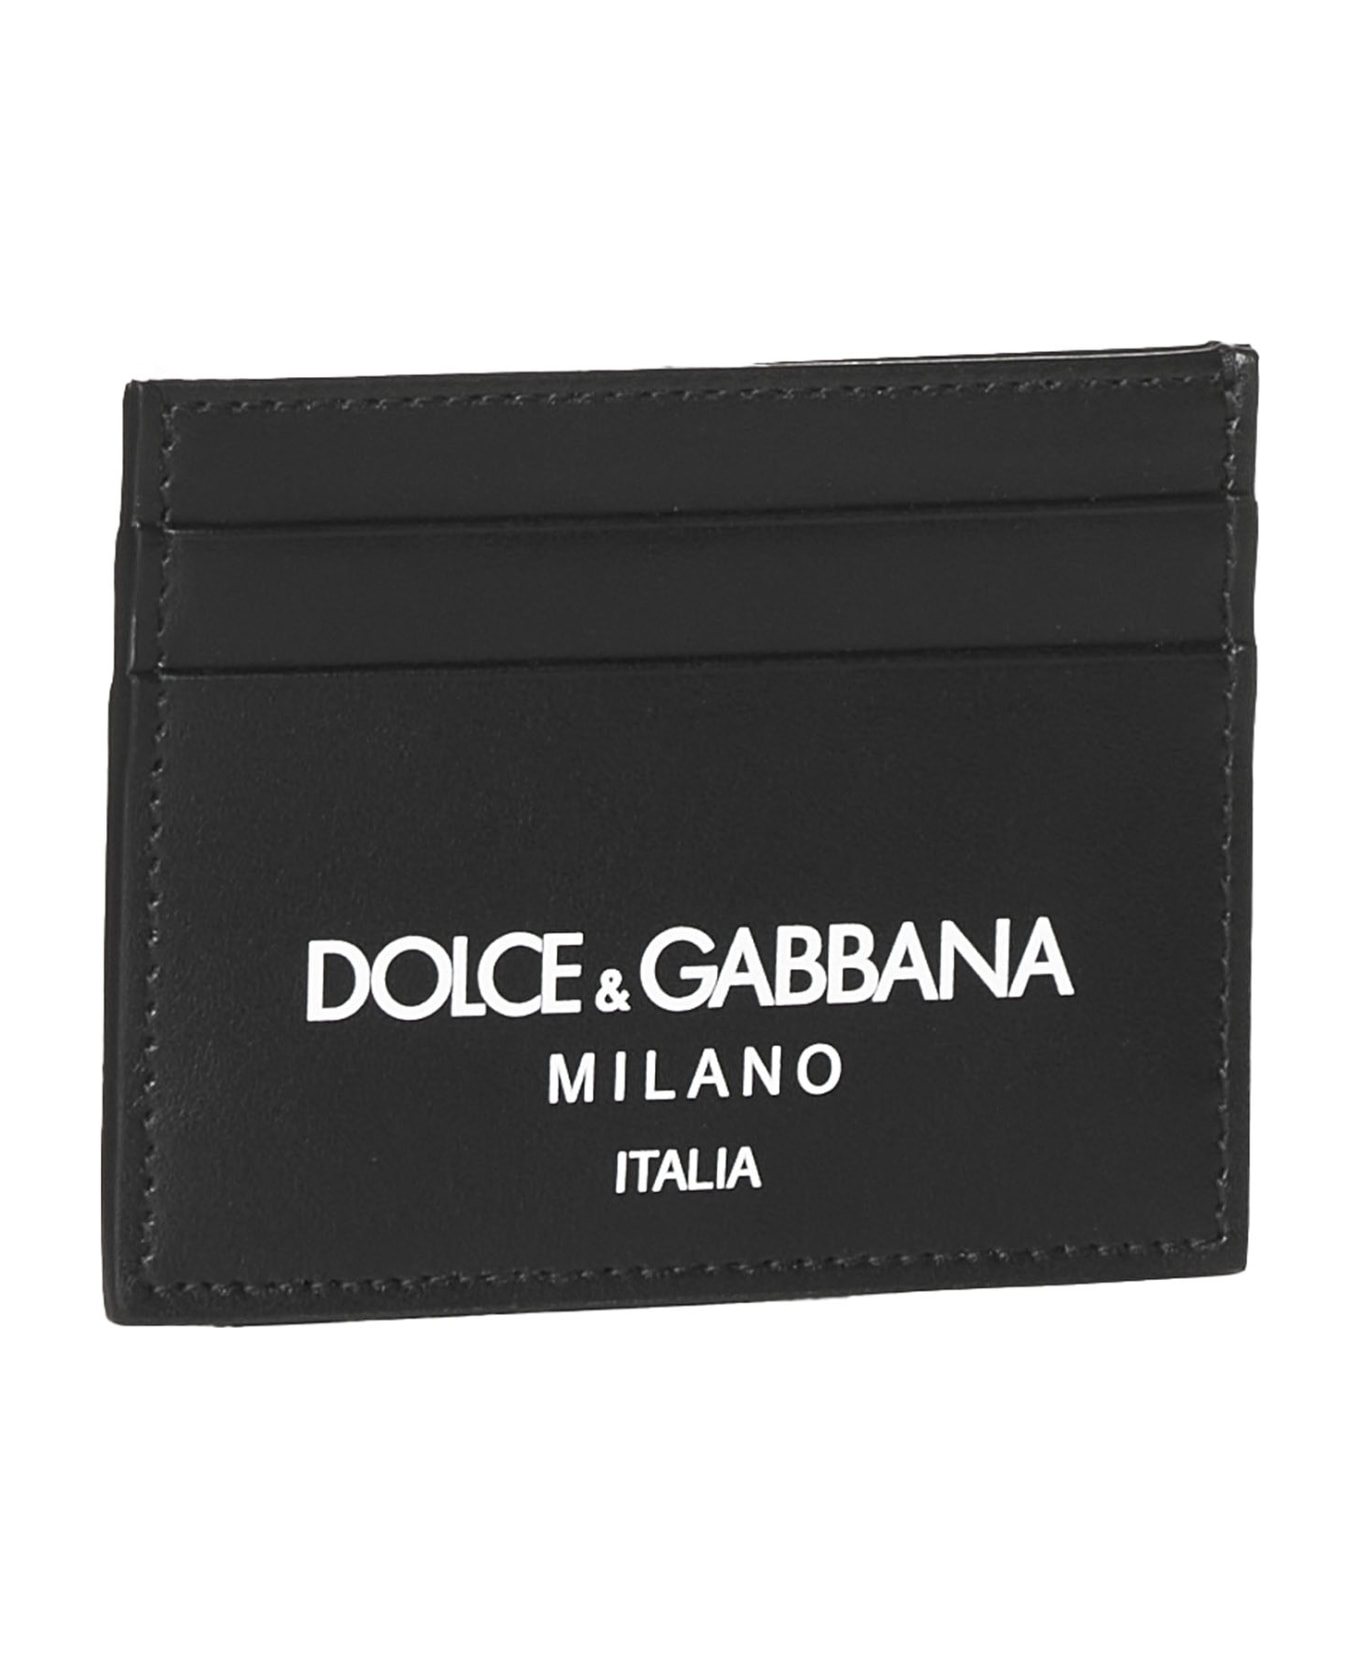 Dolce & Gabbana Wallet - Dg milano italia